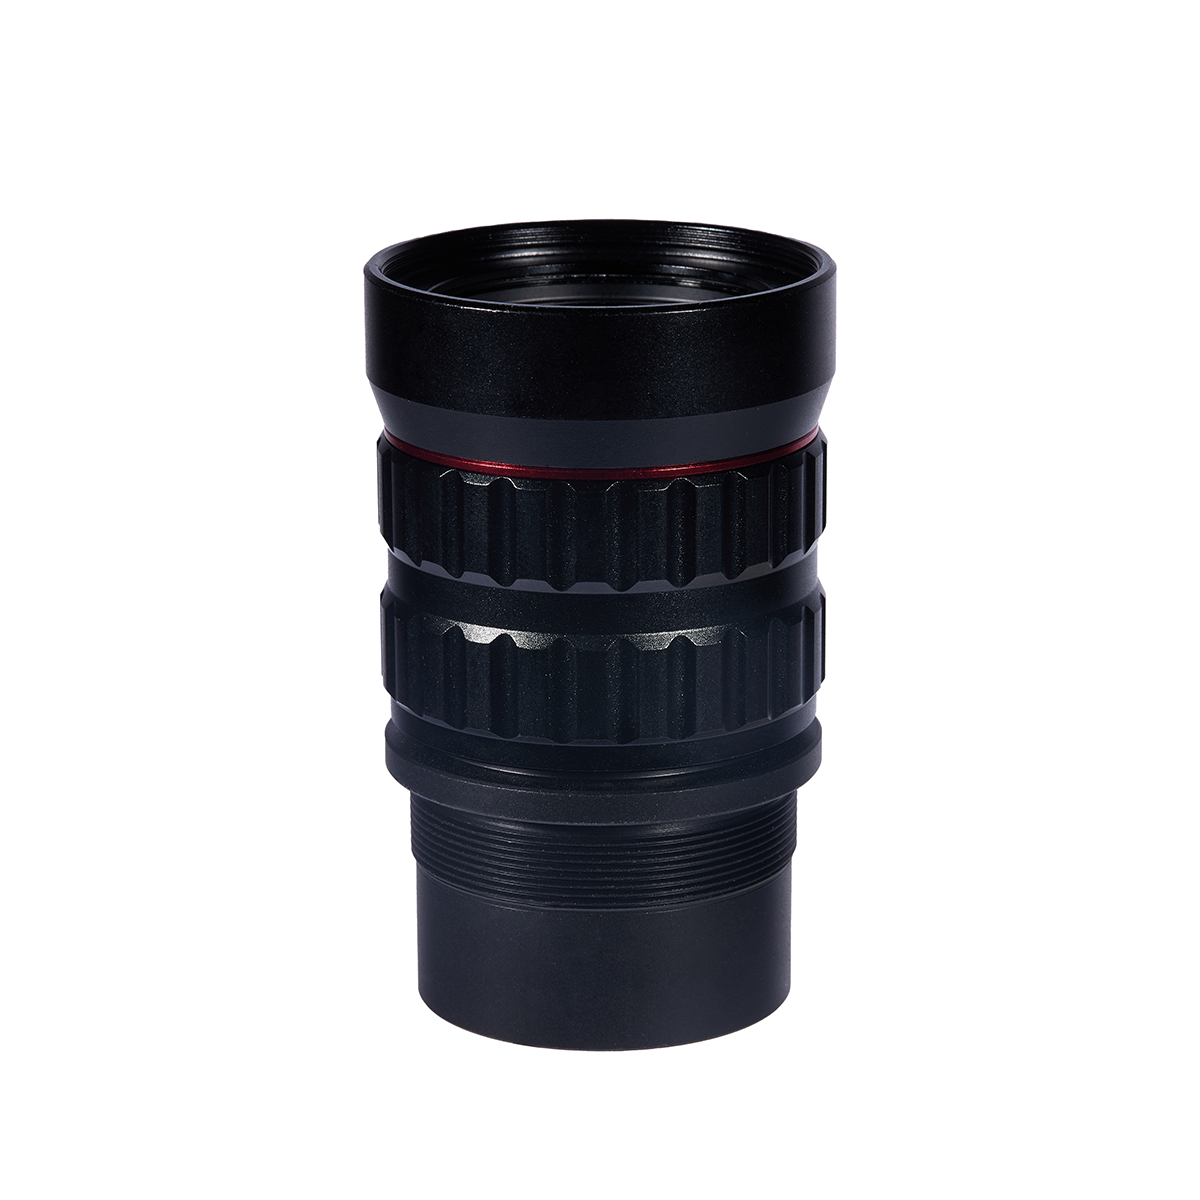 1/2" 70mm F2.4 红外夜视仪 物镜 高清5MP像素 M34*P0.75接口 定焦镜头 CH3890A